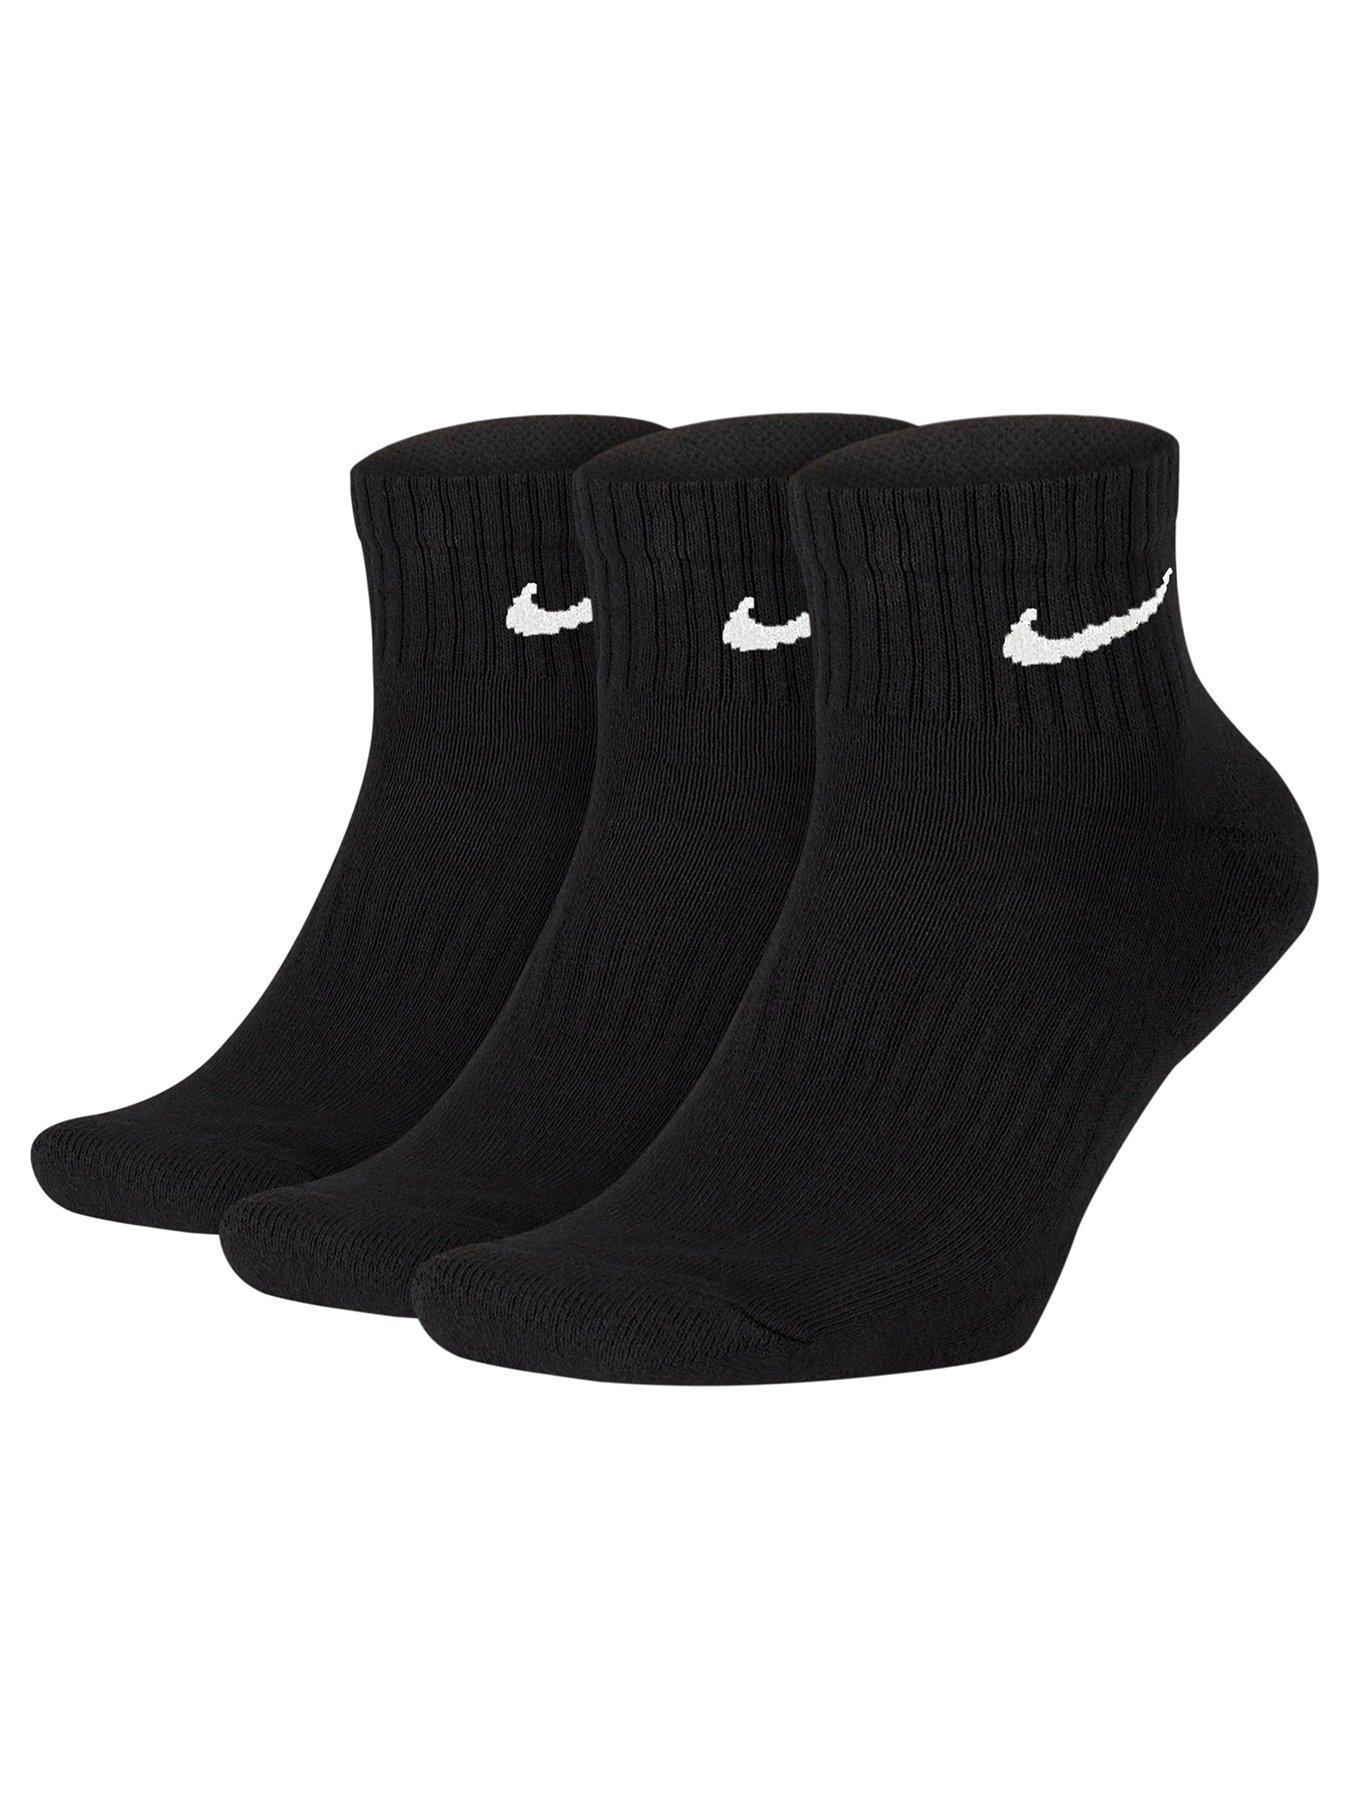 Nike Everyday Cushion Ankle Socks (3 Pack) - Black | very.co.uk